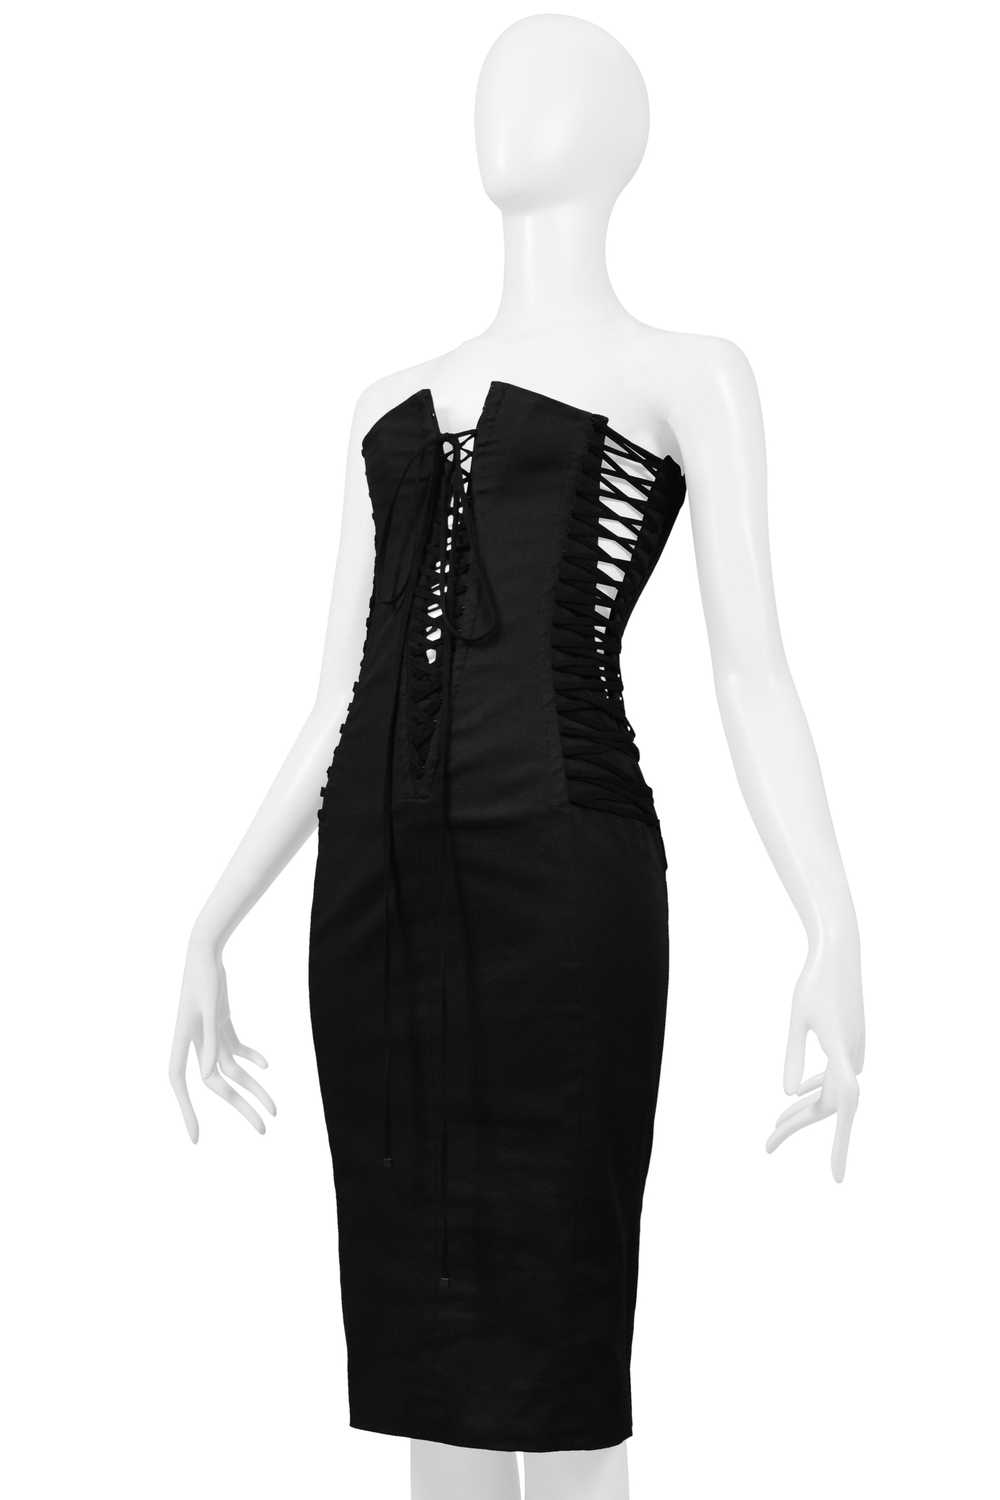 DOLCE & GABBANA BLACK STRAPLESS CORSET DRESS 2002 - image 5